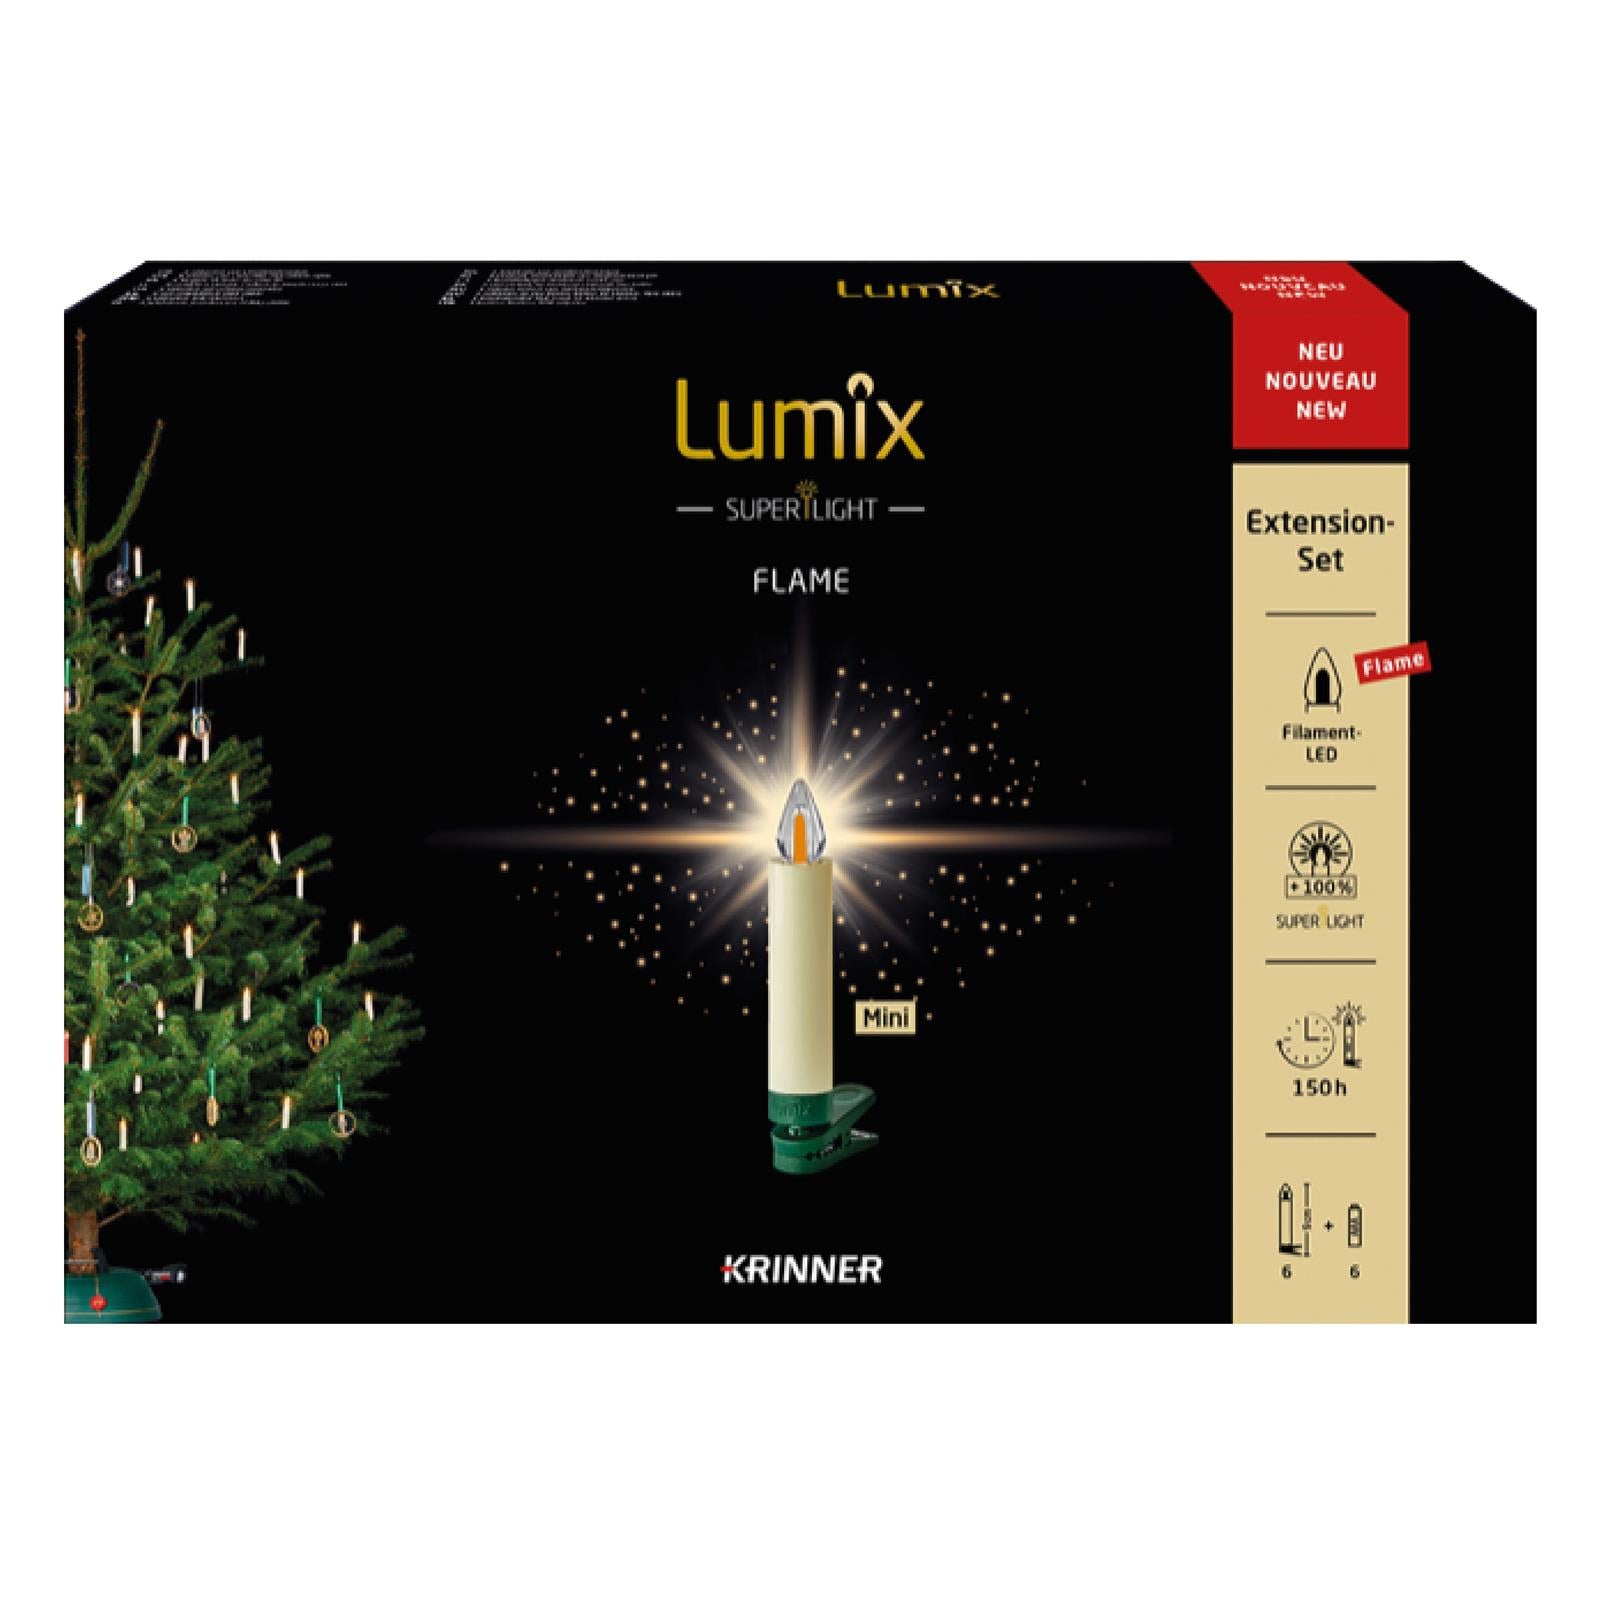 LUMIX SuperLight Flame Mini Erweiterung